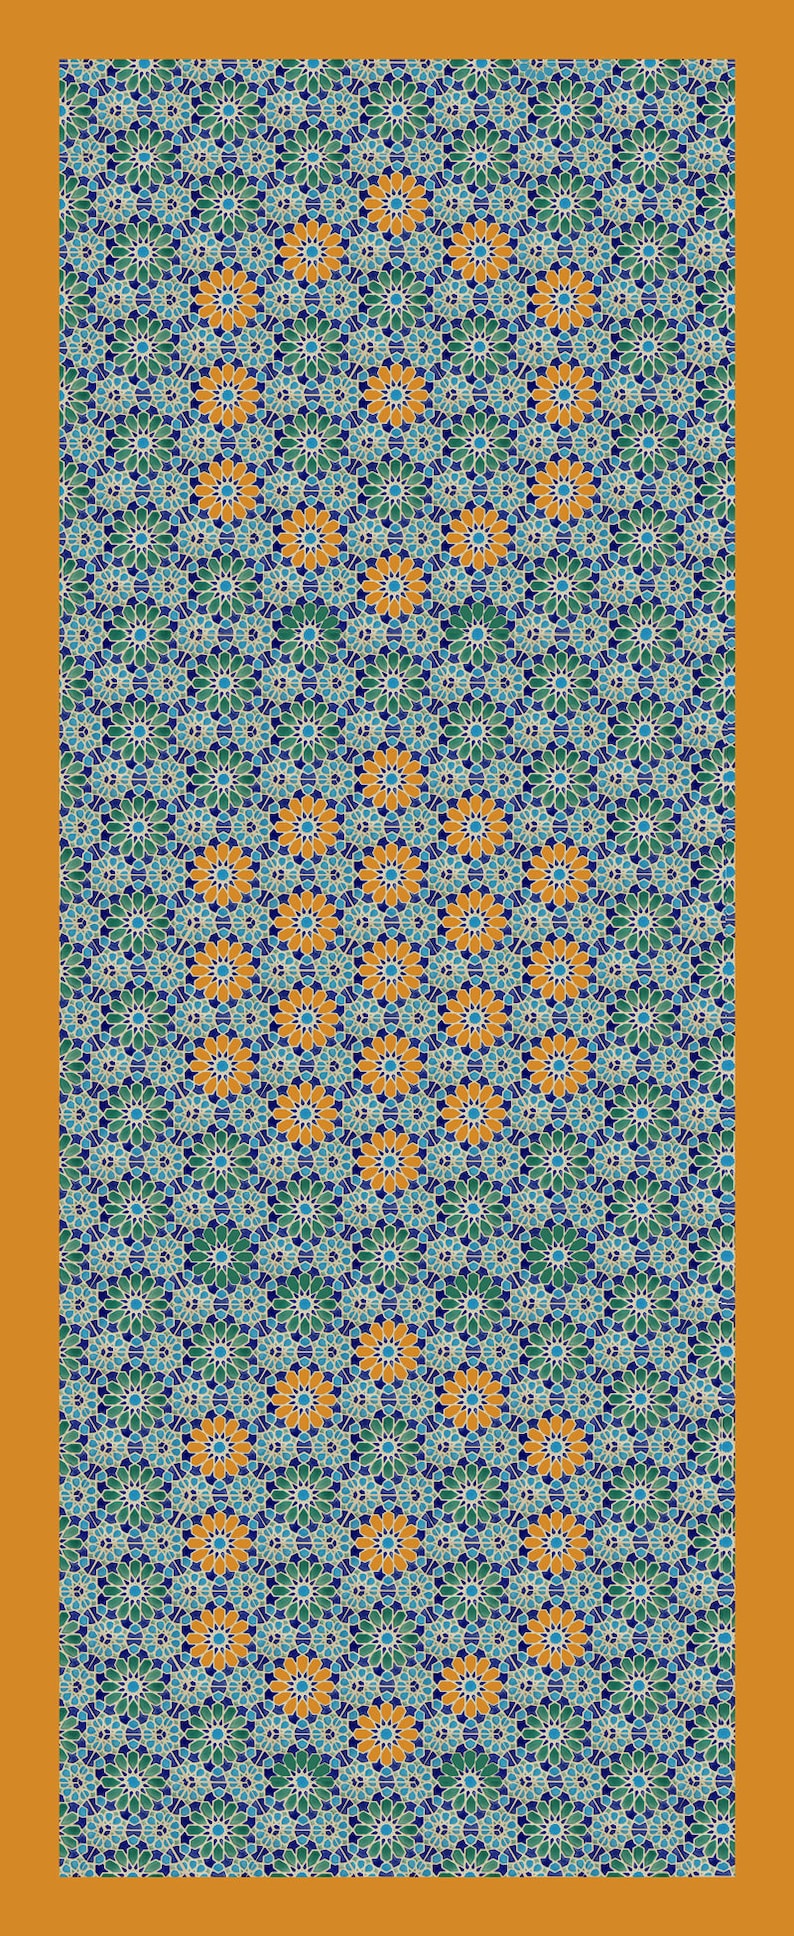 Kitchen Backsplash Tiles Moroccan Tiles Bathroom Tiles Hand Painted Tiles Kitchen Remodel Blue and Green Tiles Moroccan Style image 10